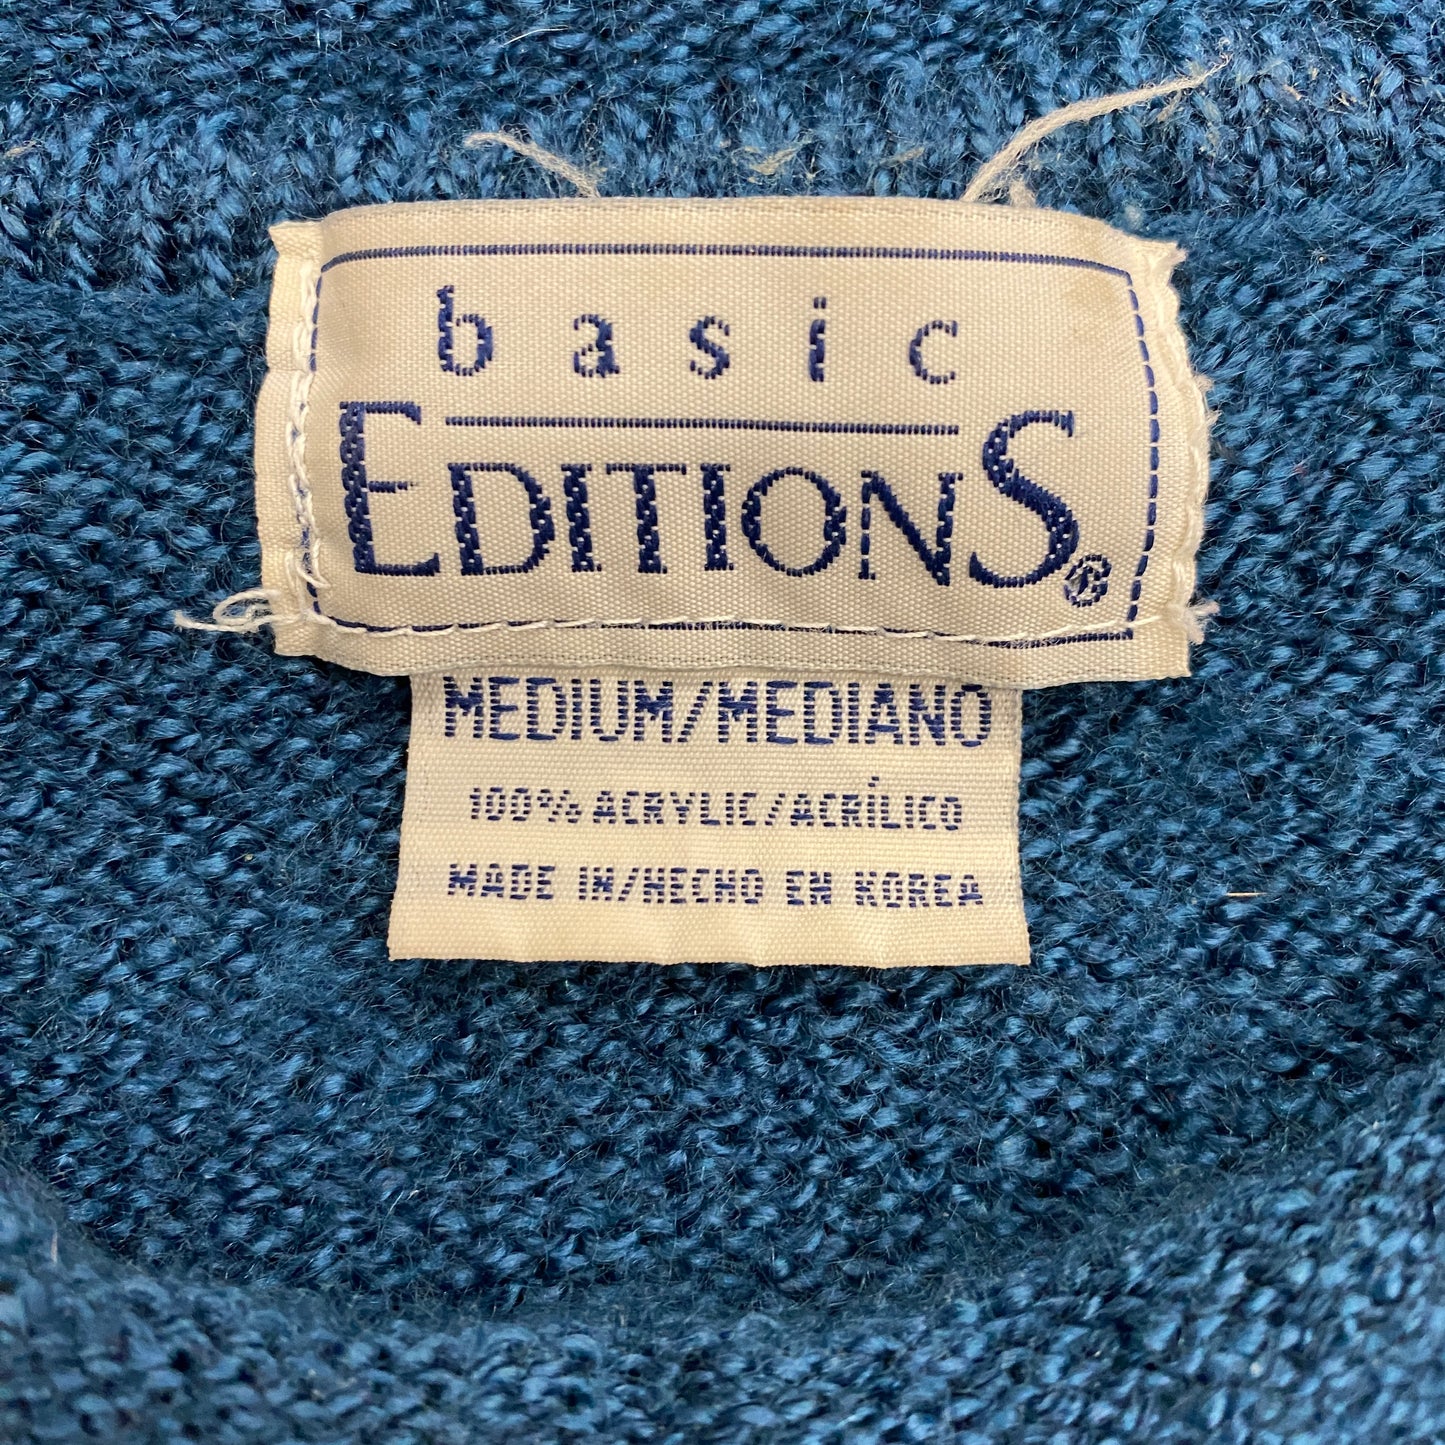 90s Rolled Neck Blue Raglan Sweater - Size Medium